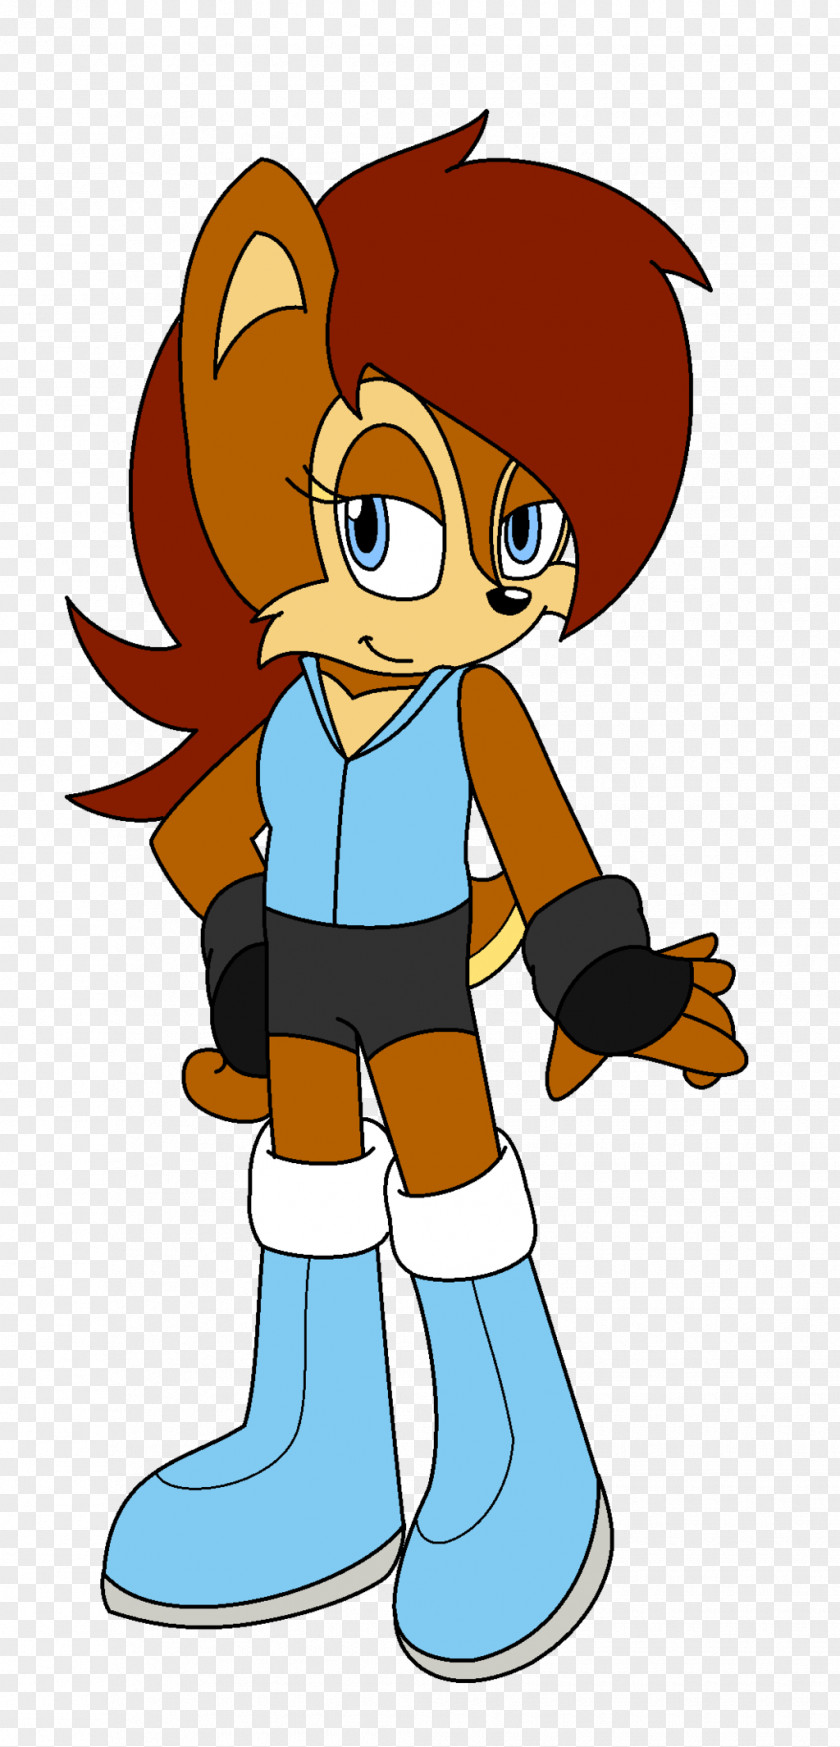 Acorn Sonic The Hedgehog Tails Princess Sally Squirrel Cartoon PNG